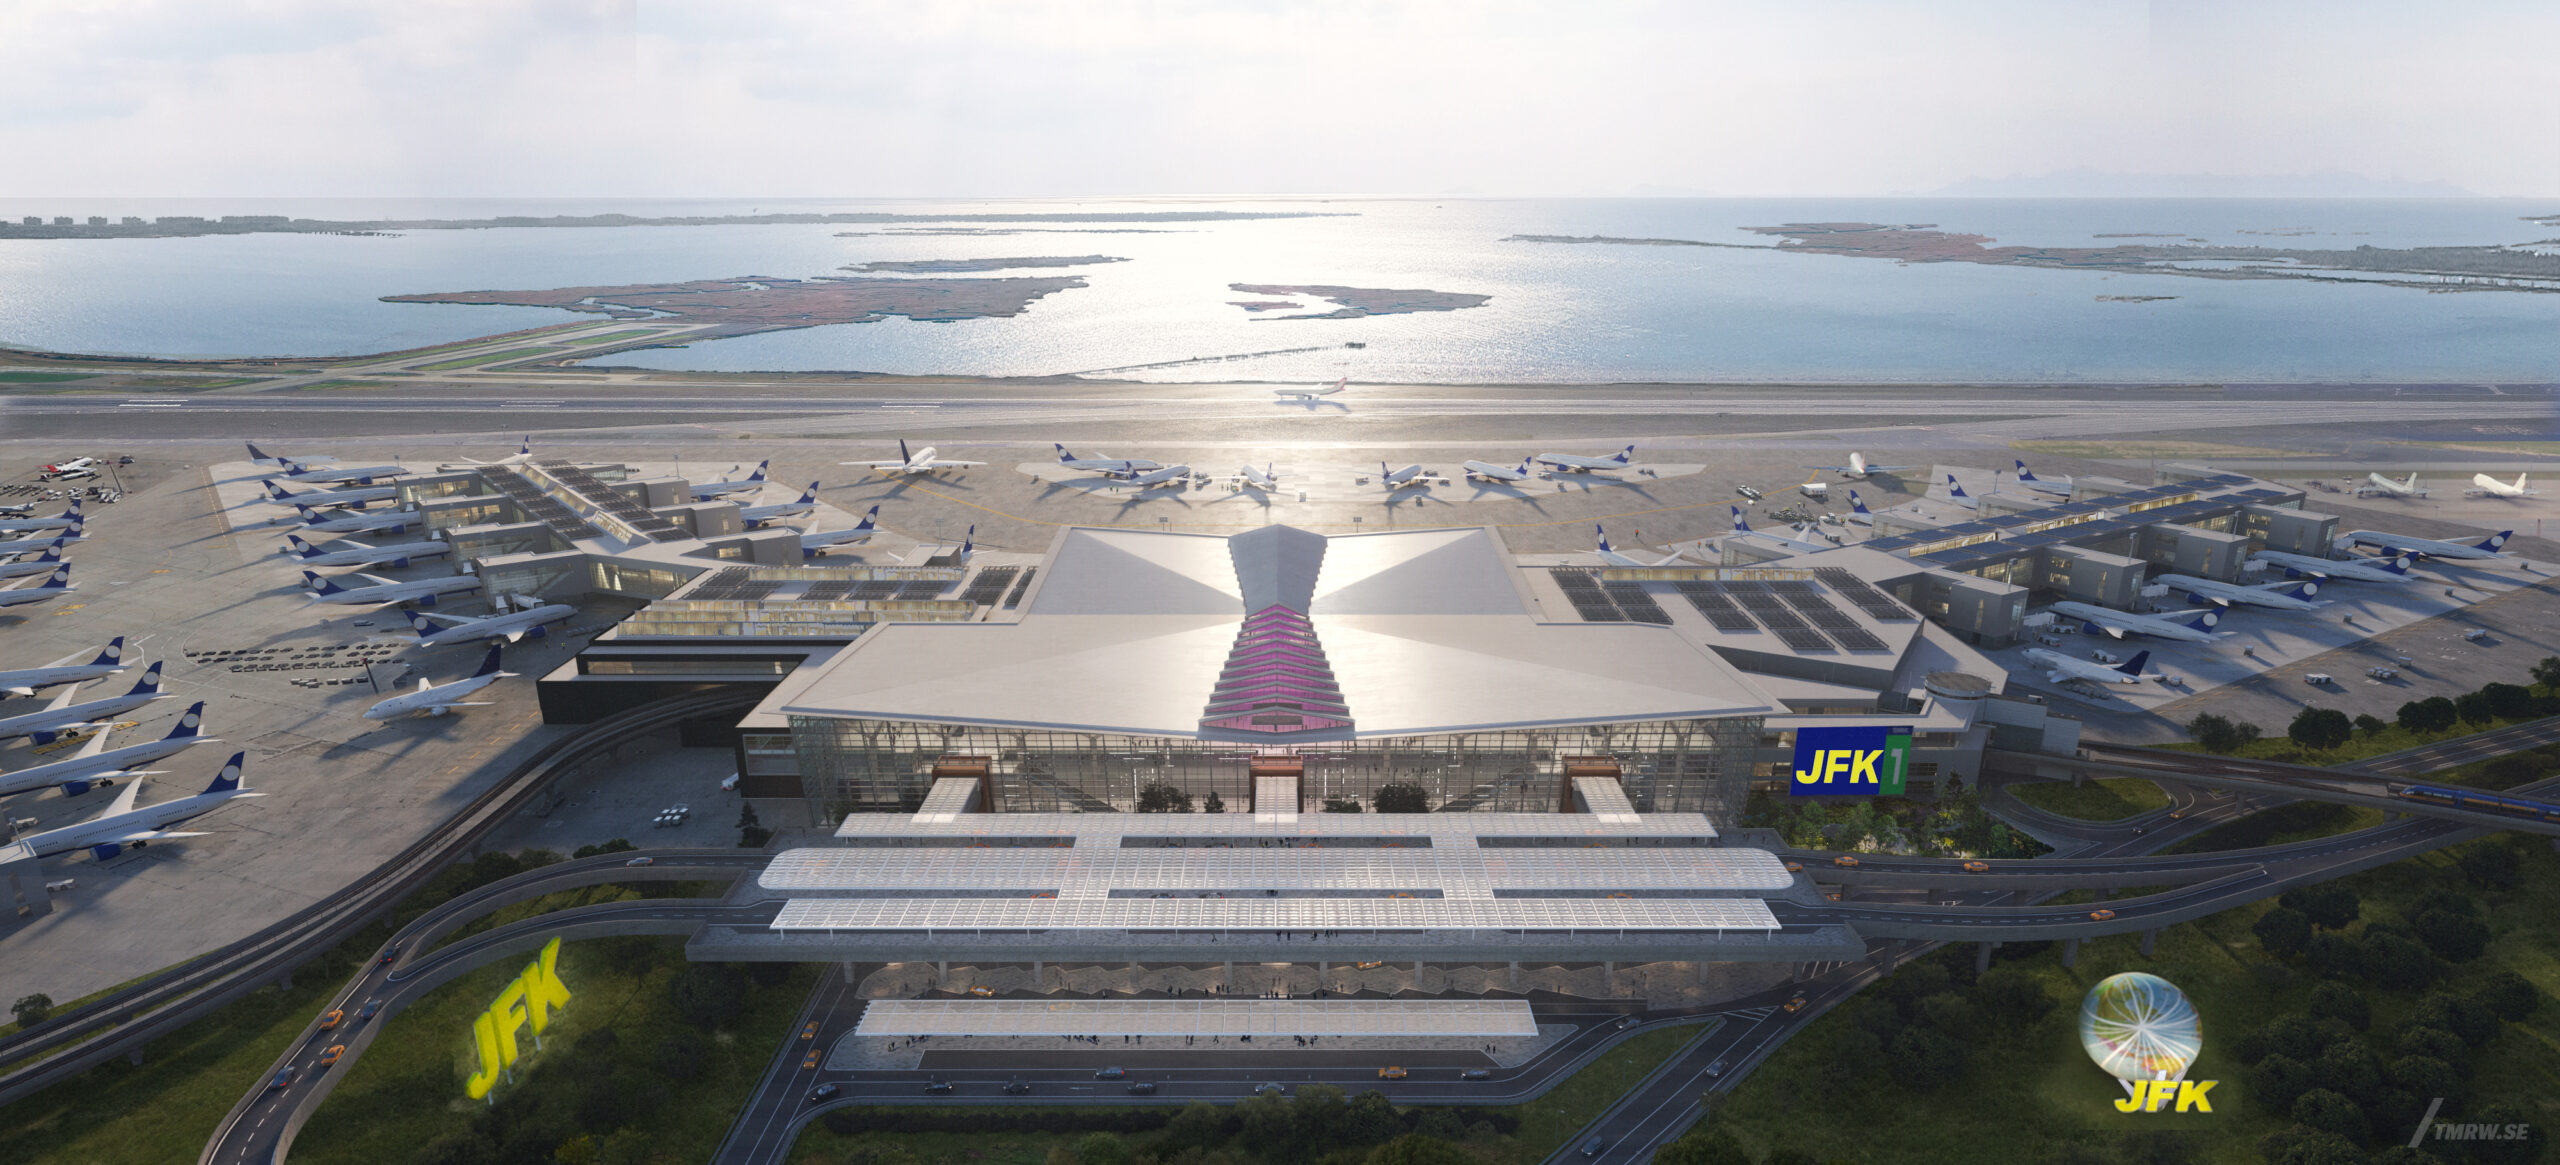 JFK Terminal 1